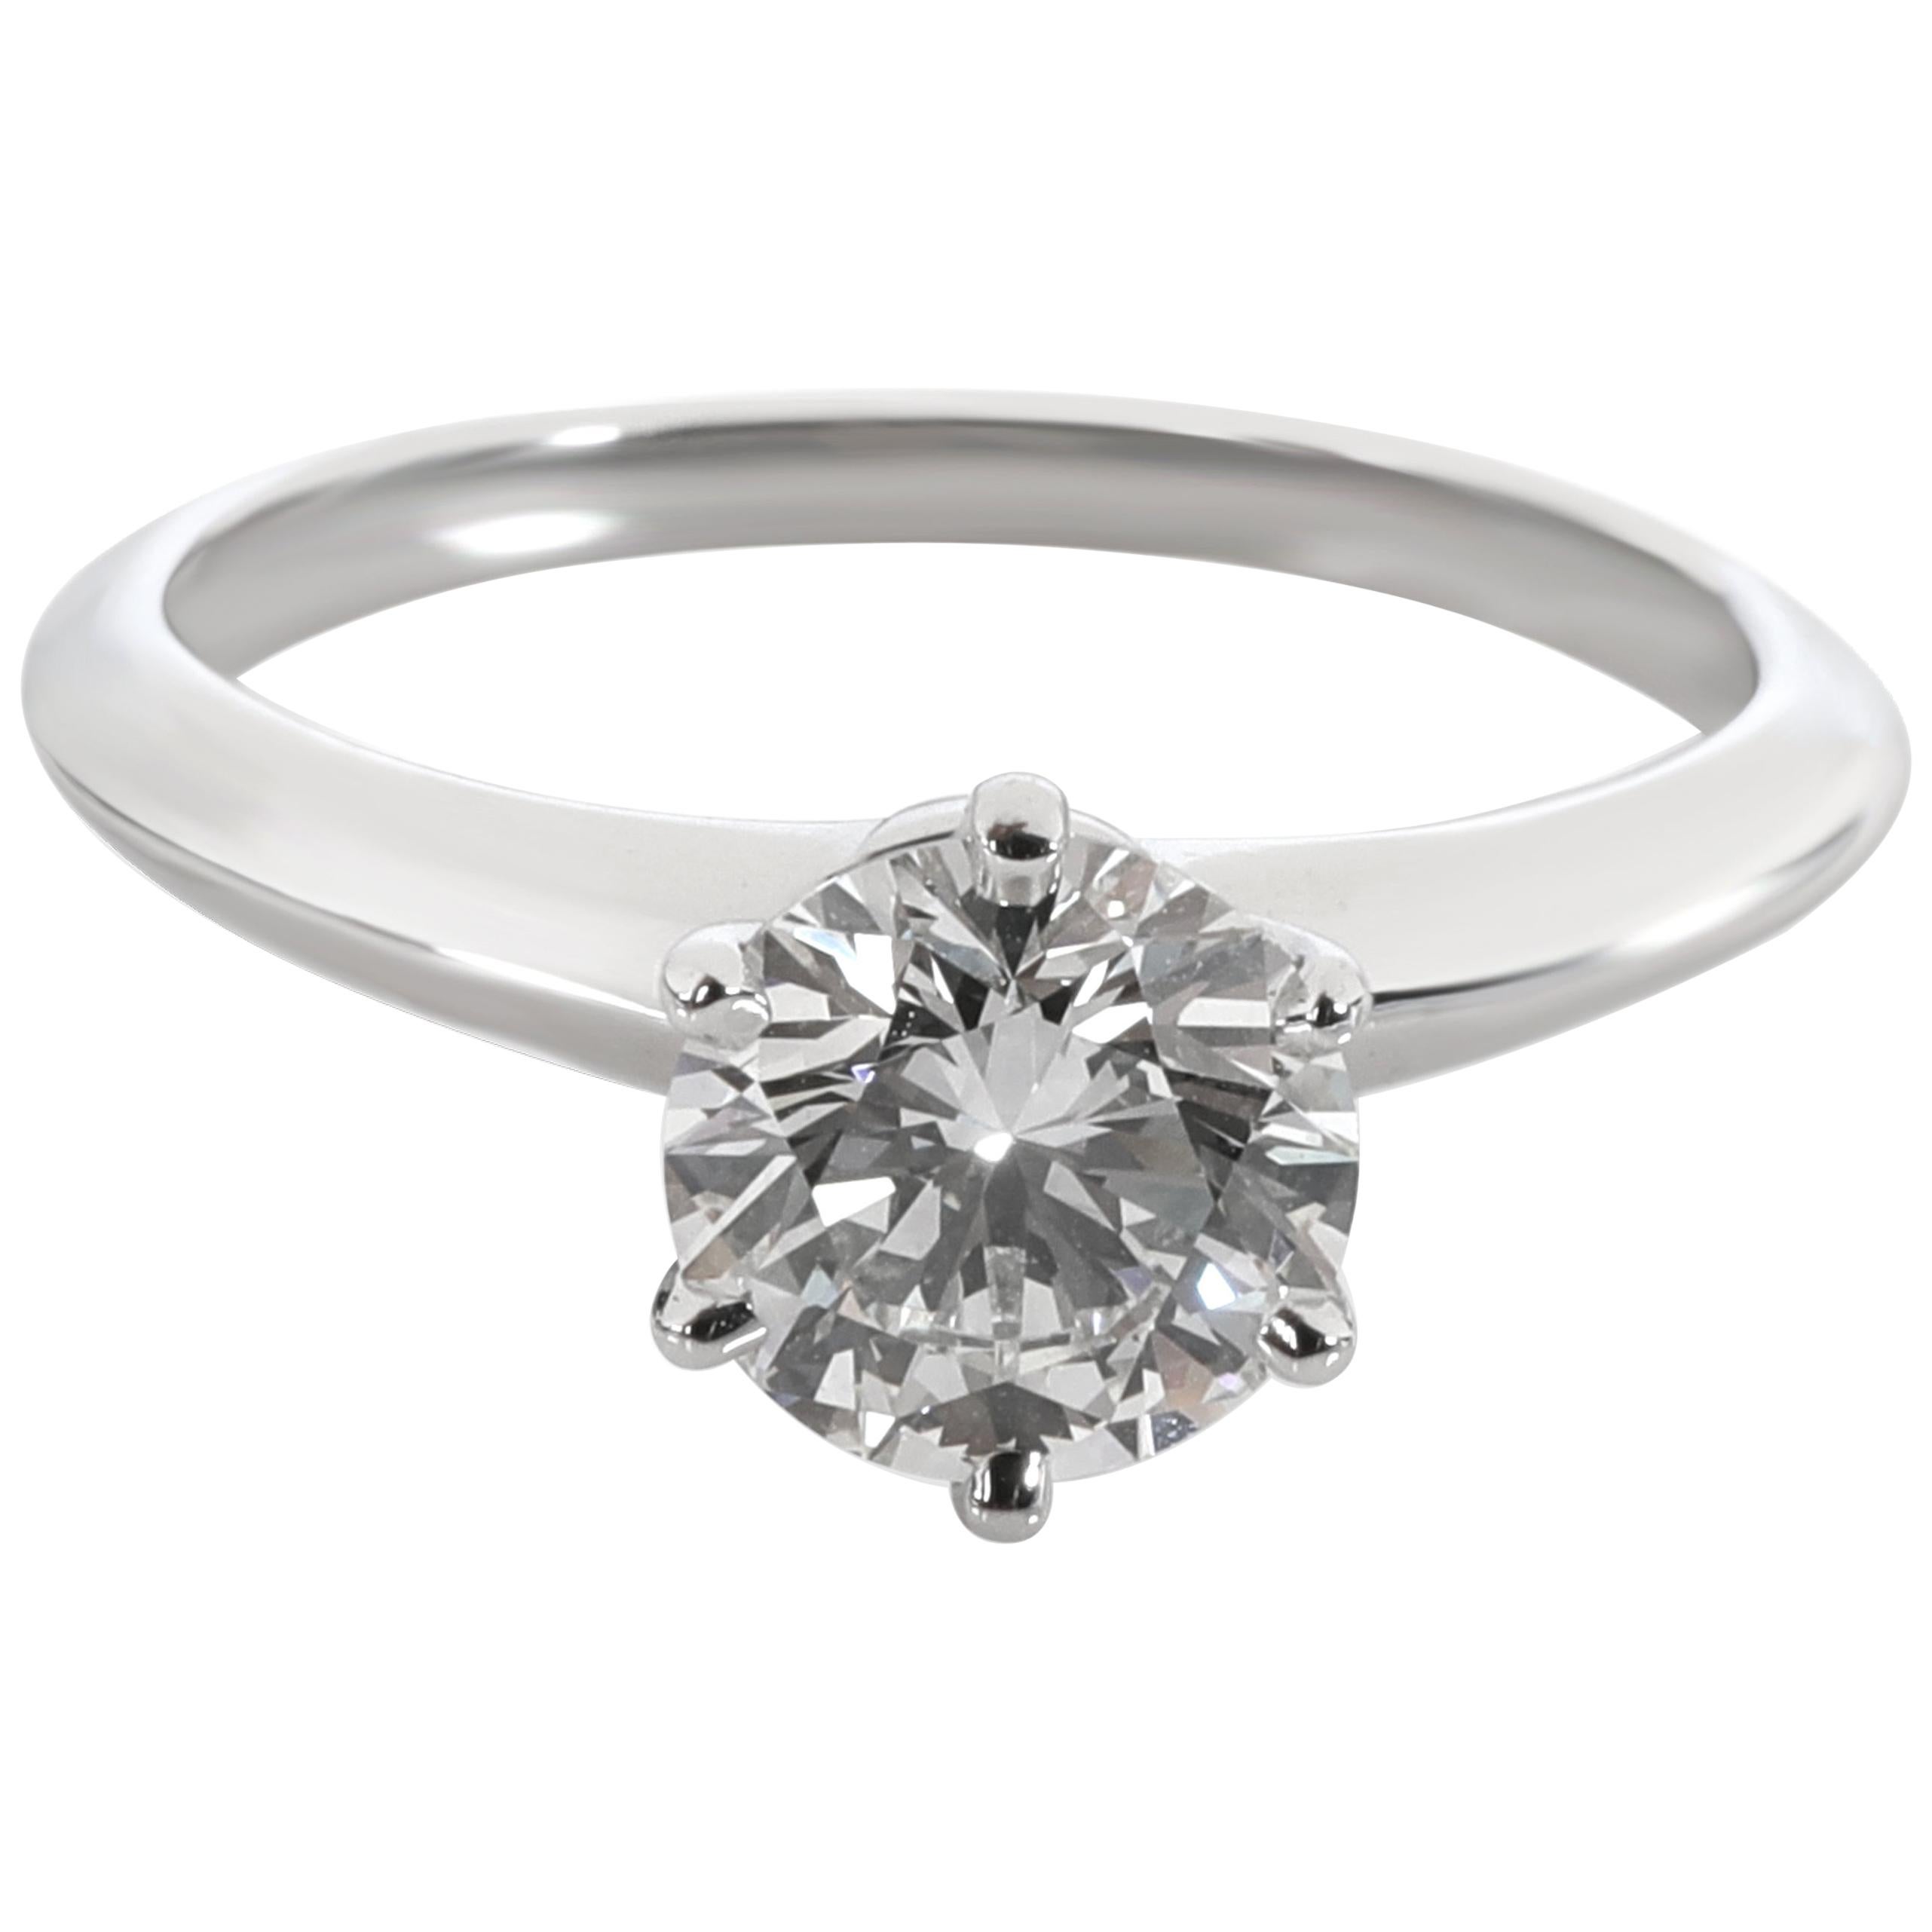 Tiffany & Co. Diamond Solitaire Engagement Ring in Platinum G VVS2 1.17 Carat